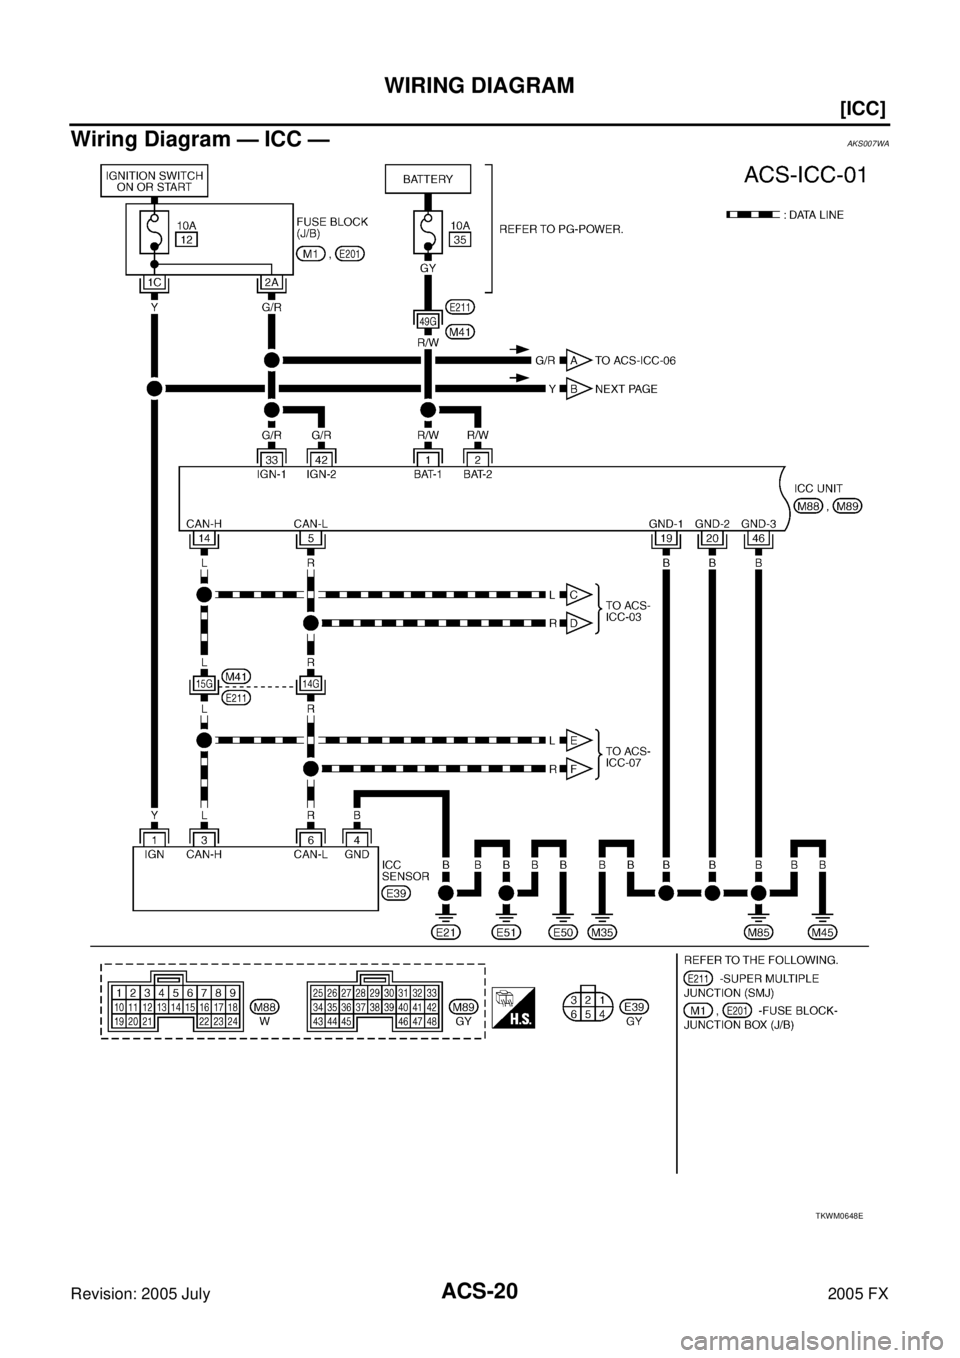 INFINITI FX35 2005  Service Manual ACS-20
[ICC]
WIRING DIAGRAM
Revision: 2005 July 2005 FX
Wiring Diagram — ICC —AKS007WA
TKWM0648E 